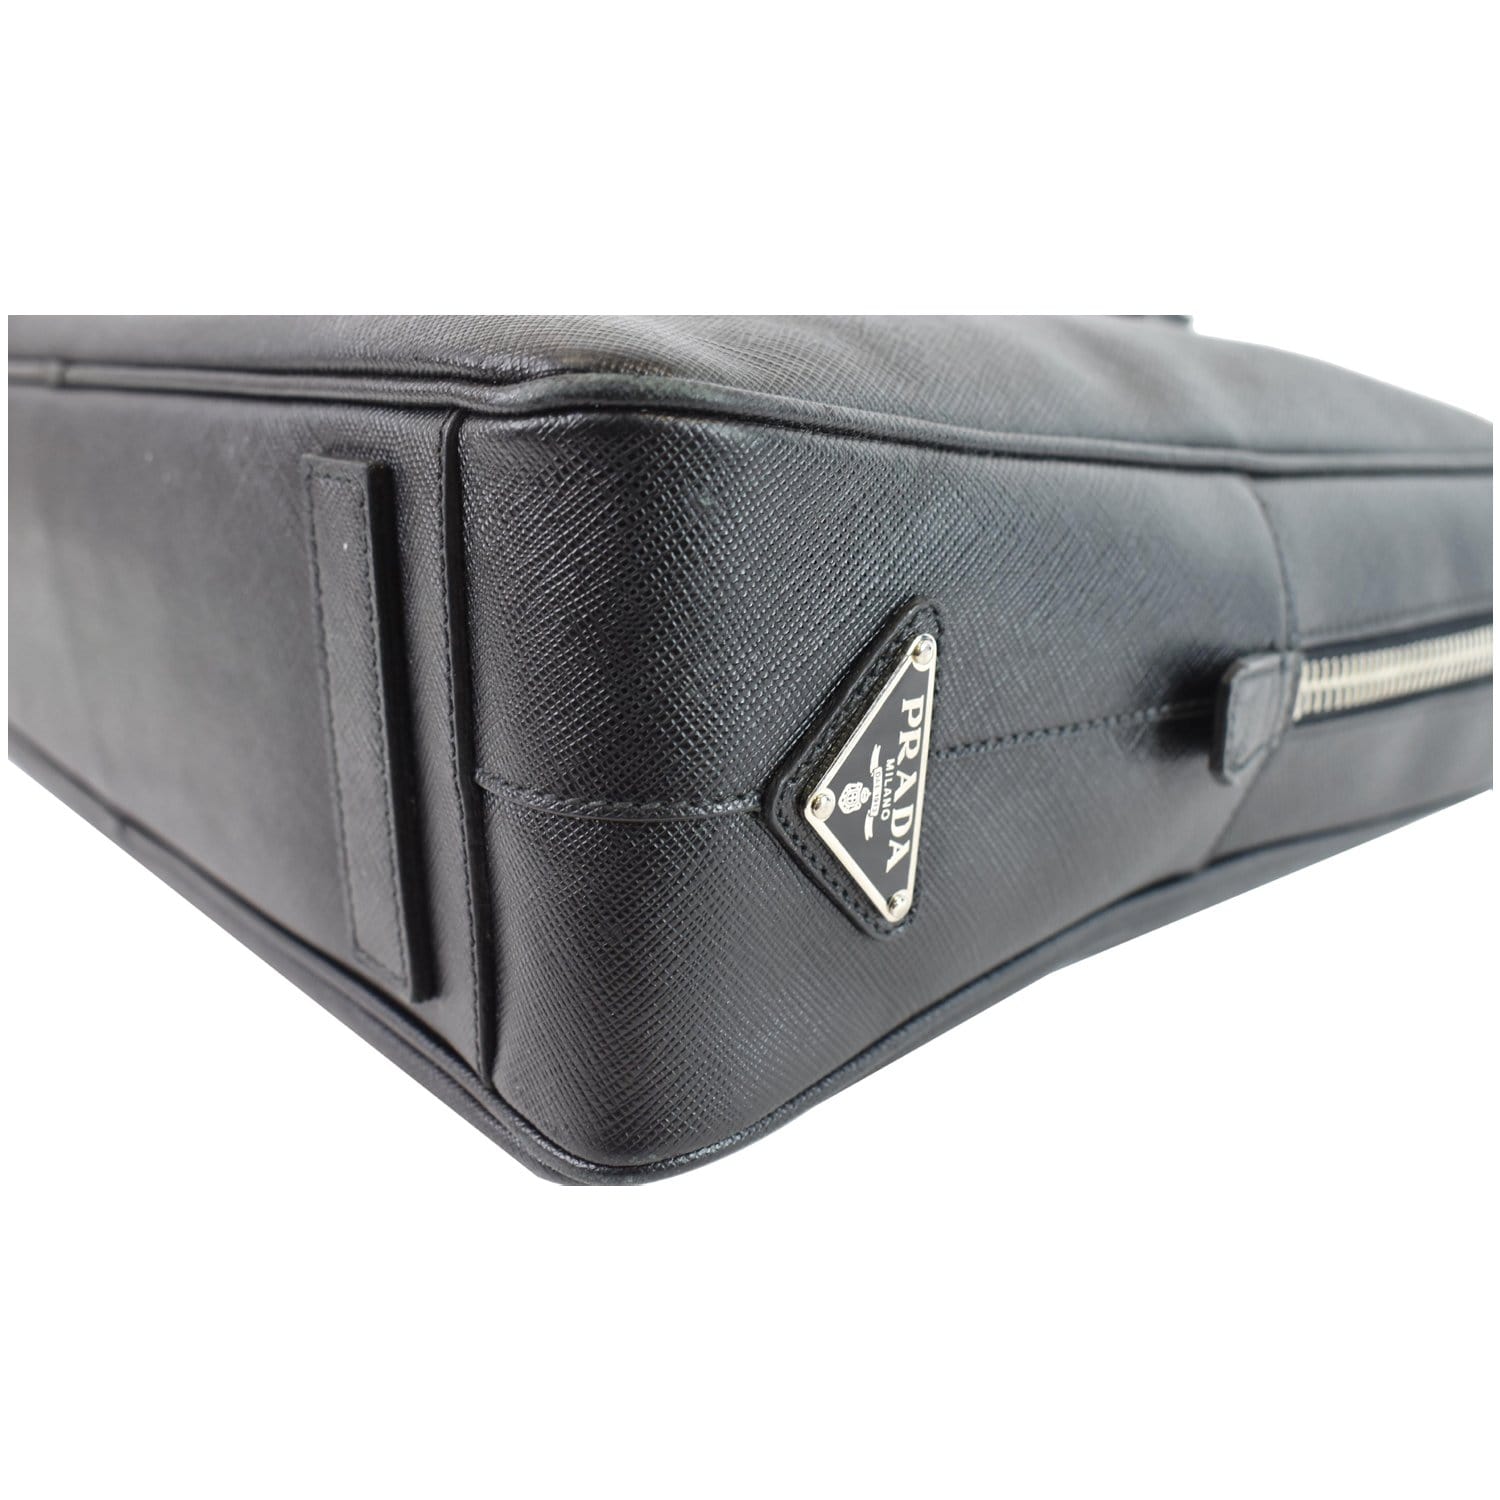 Shop Prada Saffiano Leather Briefcase